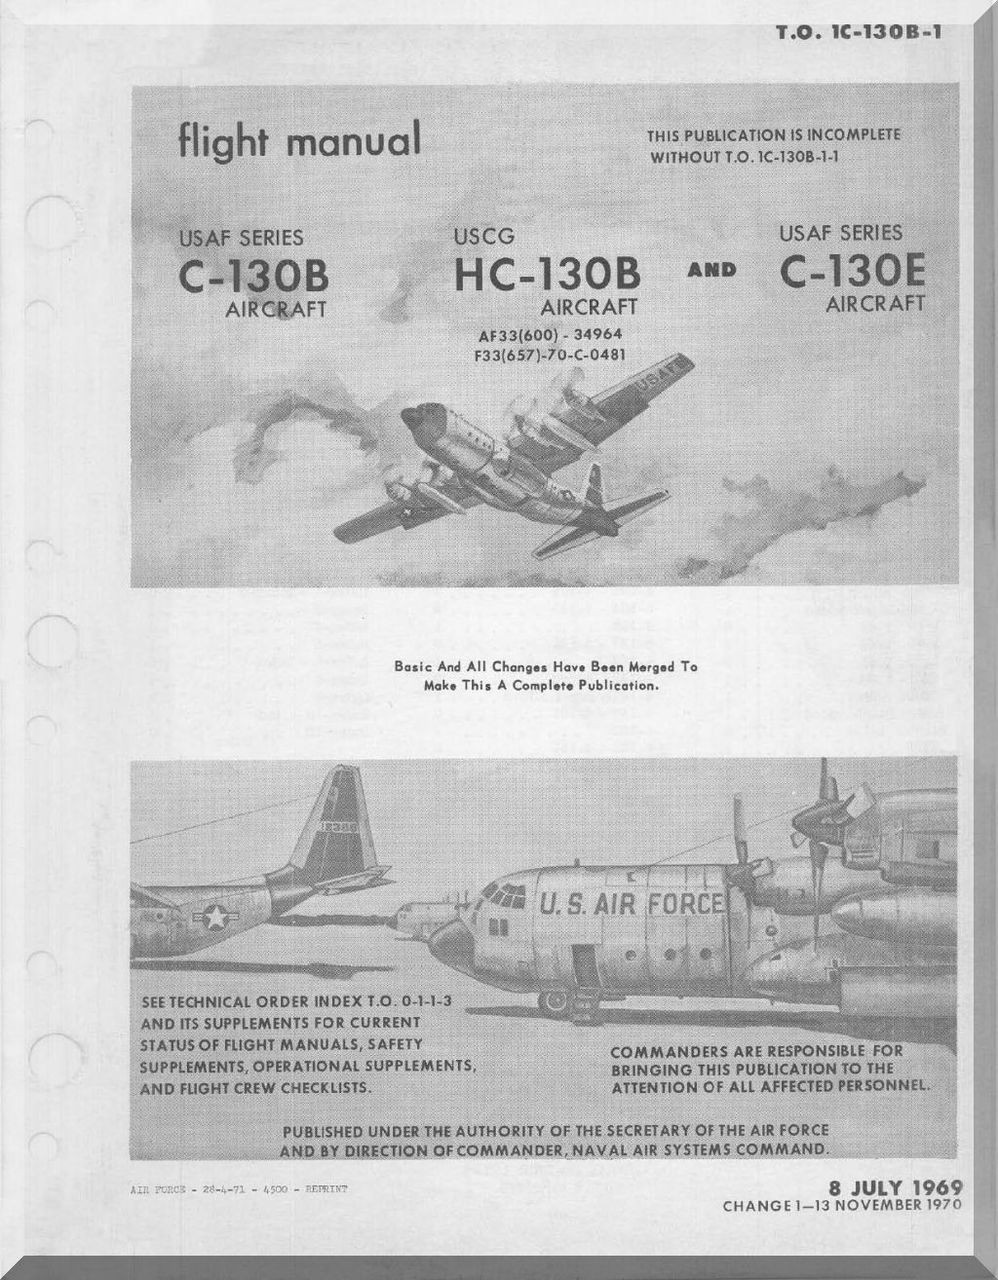 Lockheed C-130 B E HC-130B Aircraft Flight Manual, T.O. 1C-130B-1, 1969